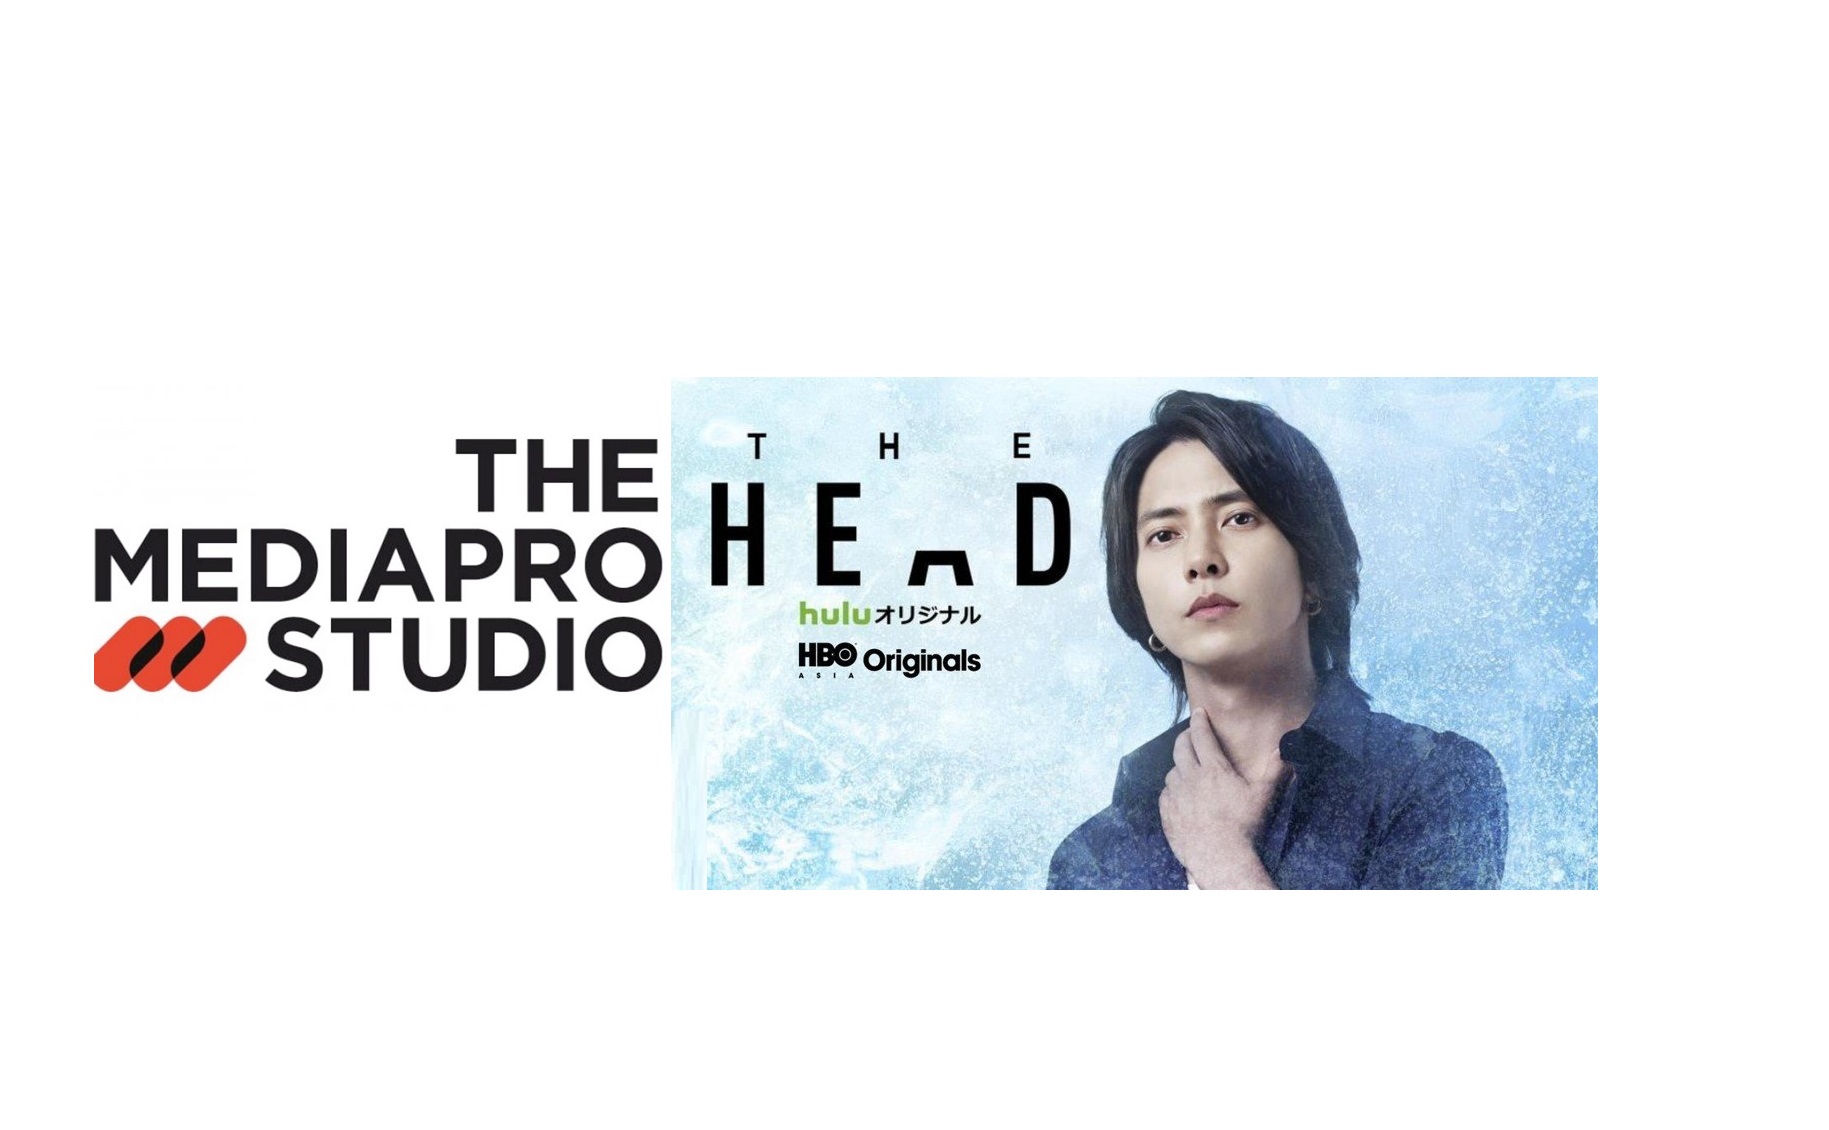 THE HEAD, HBO, mediapro studios, hulu,